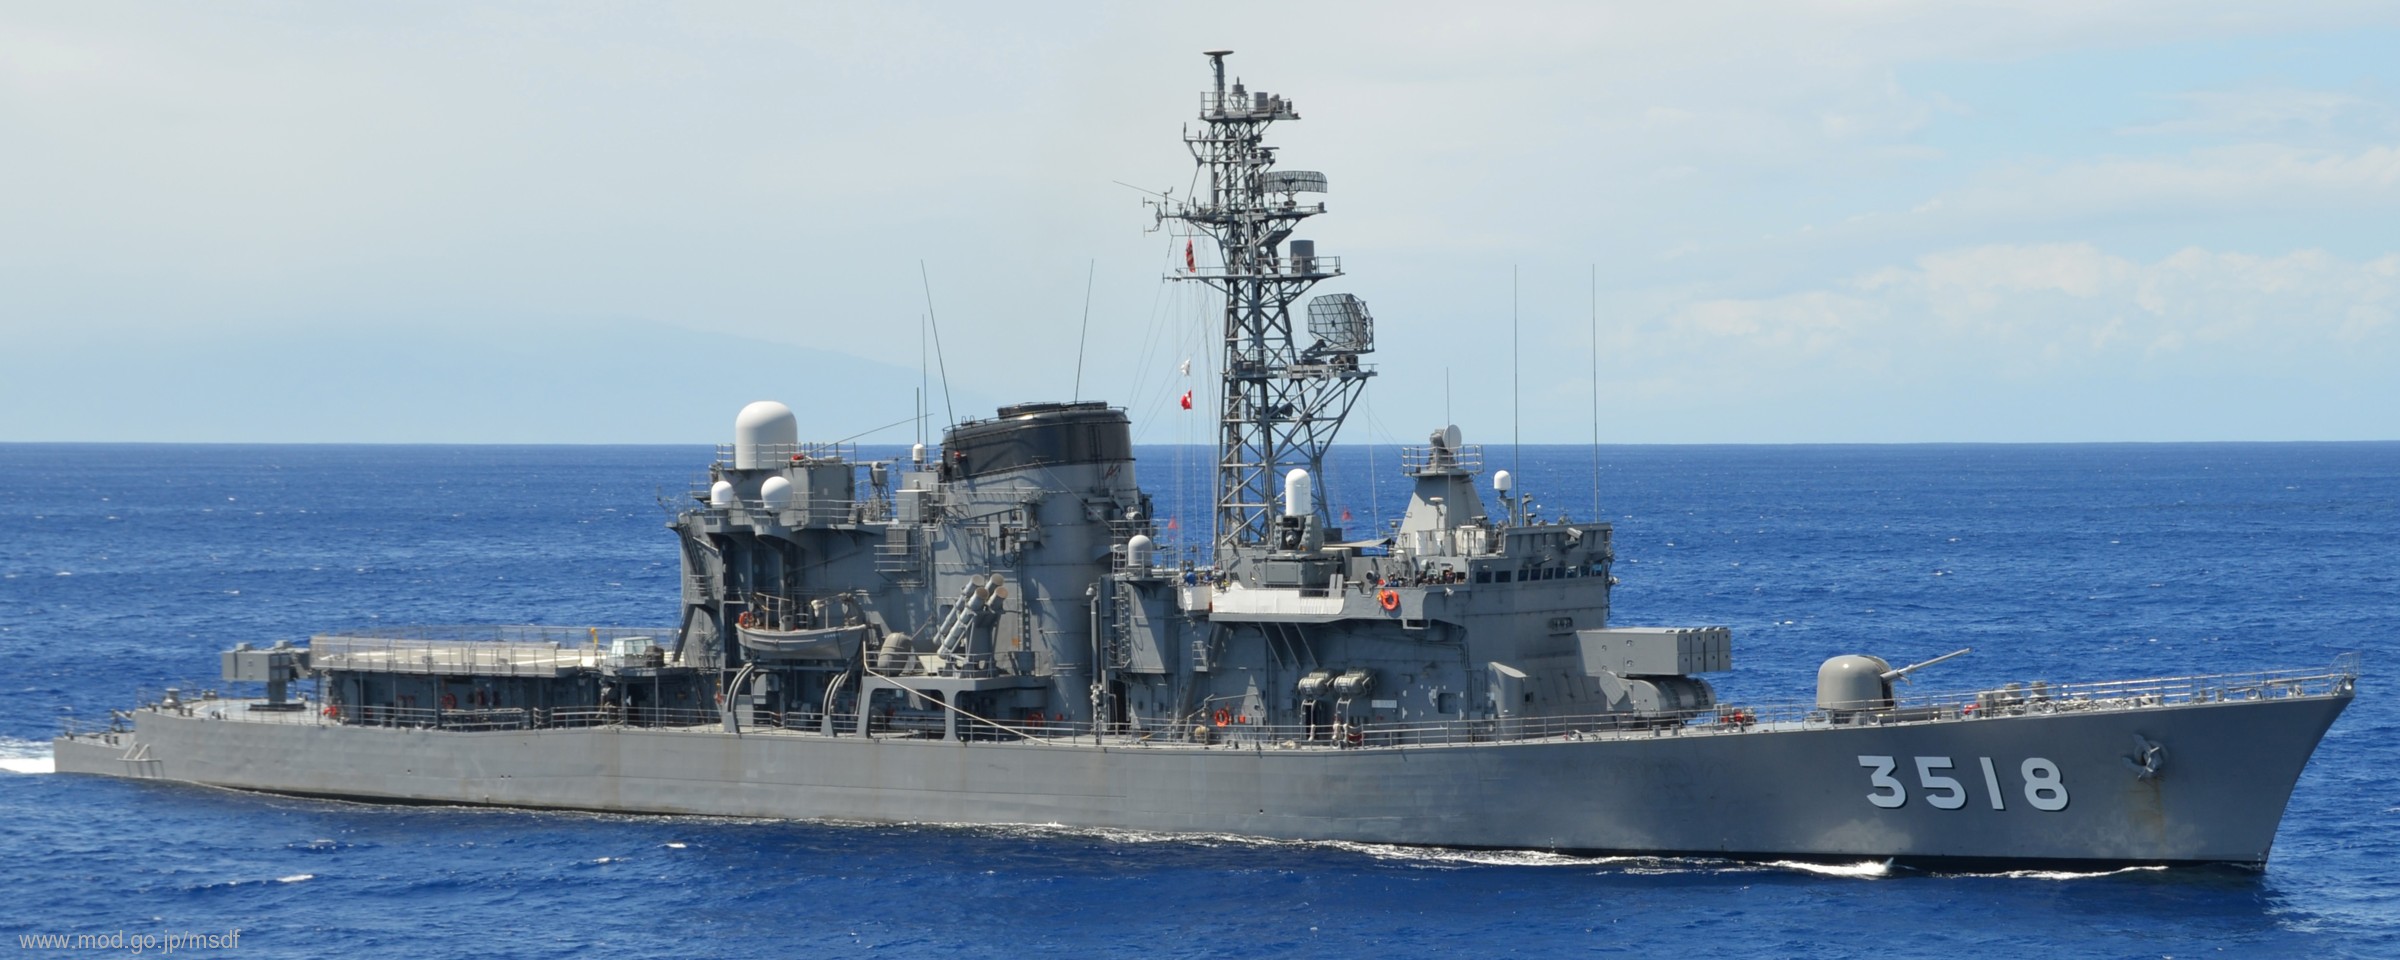 dd-131 tv-3518 jds setoyuki hatsuyuki class destroyer japan maritime self defense force jmsdf 03